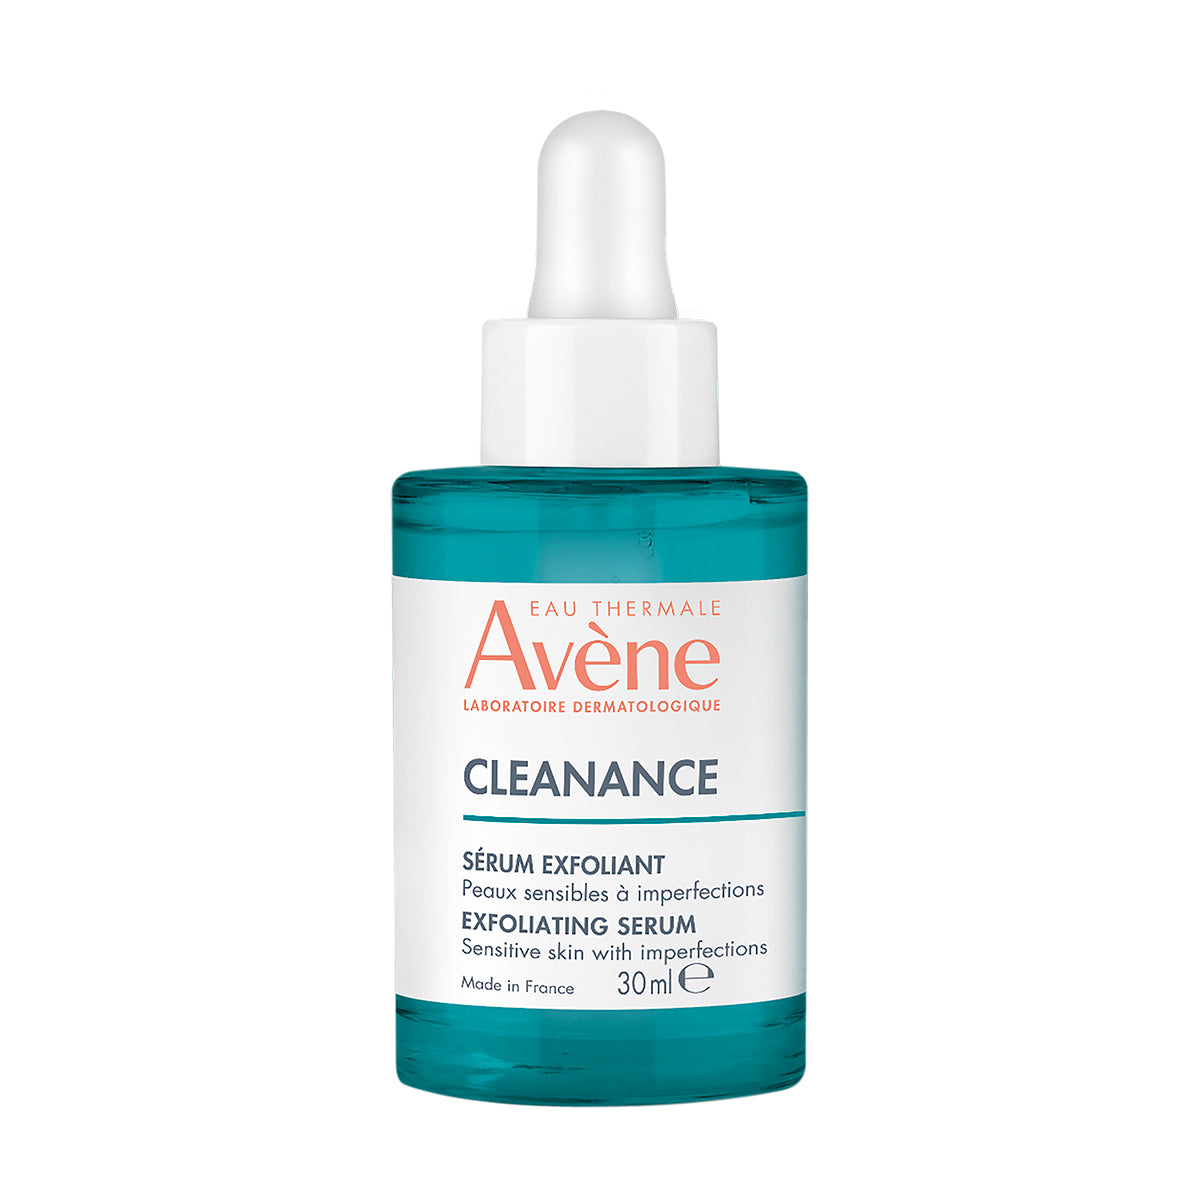 Avene cleanance serum exfoliante 30ml.